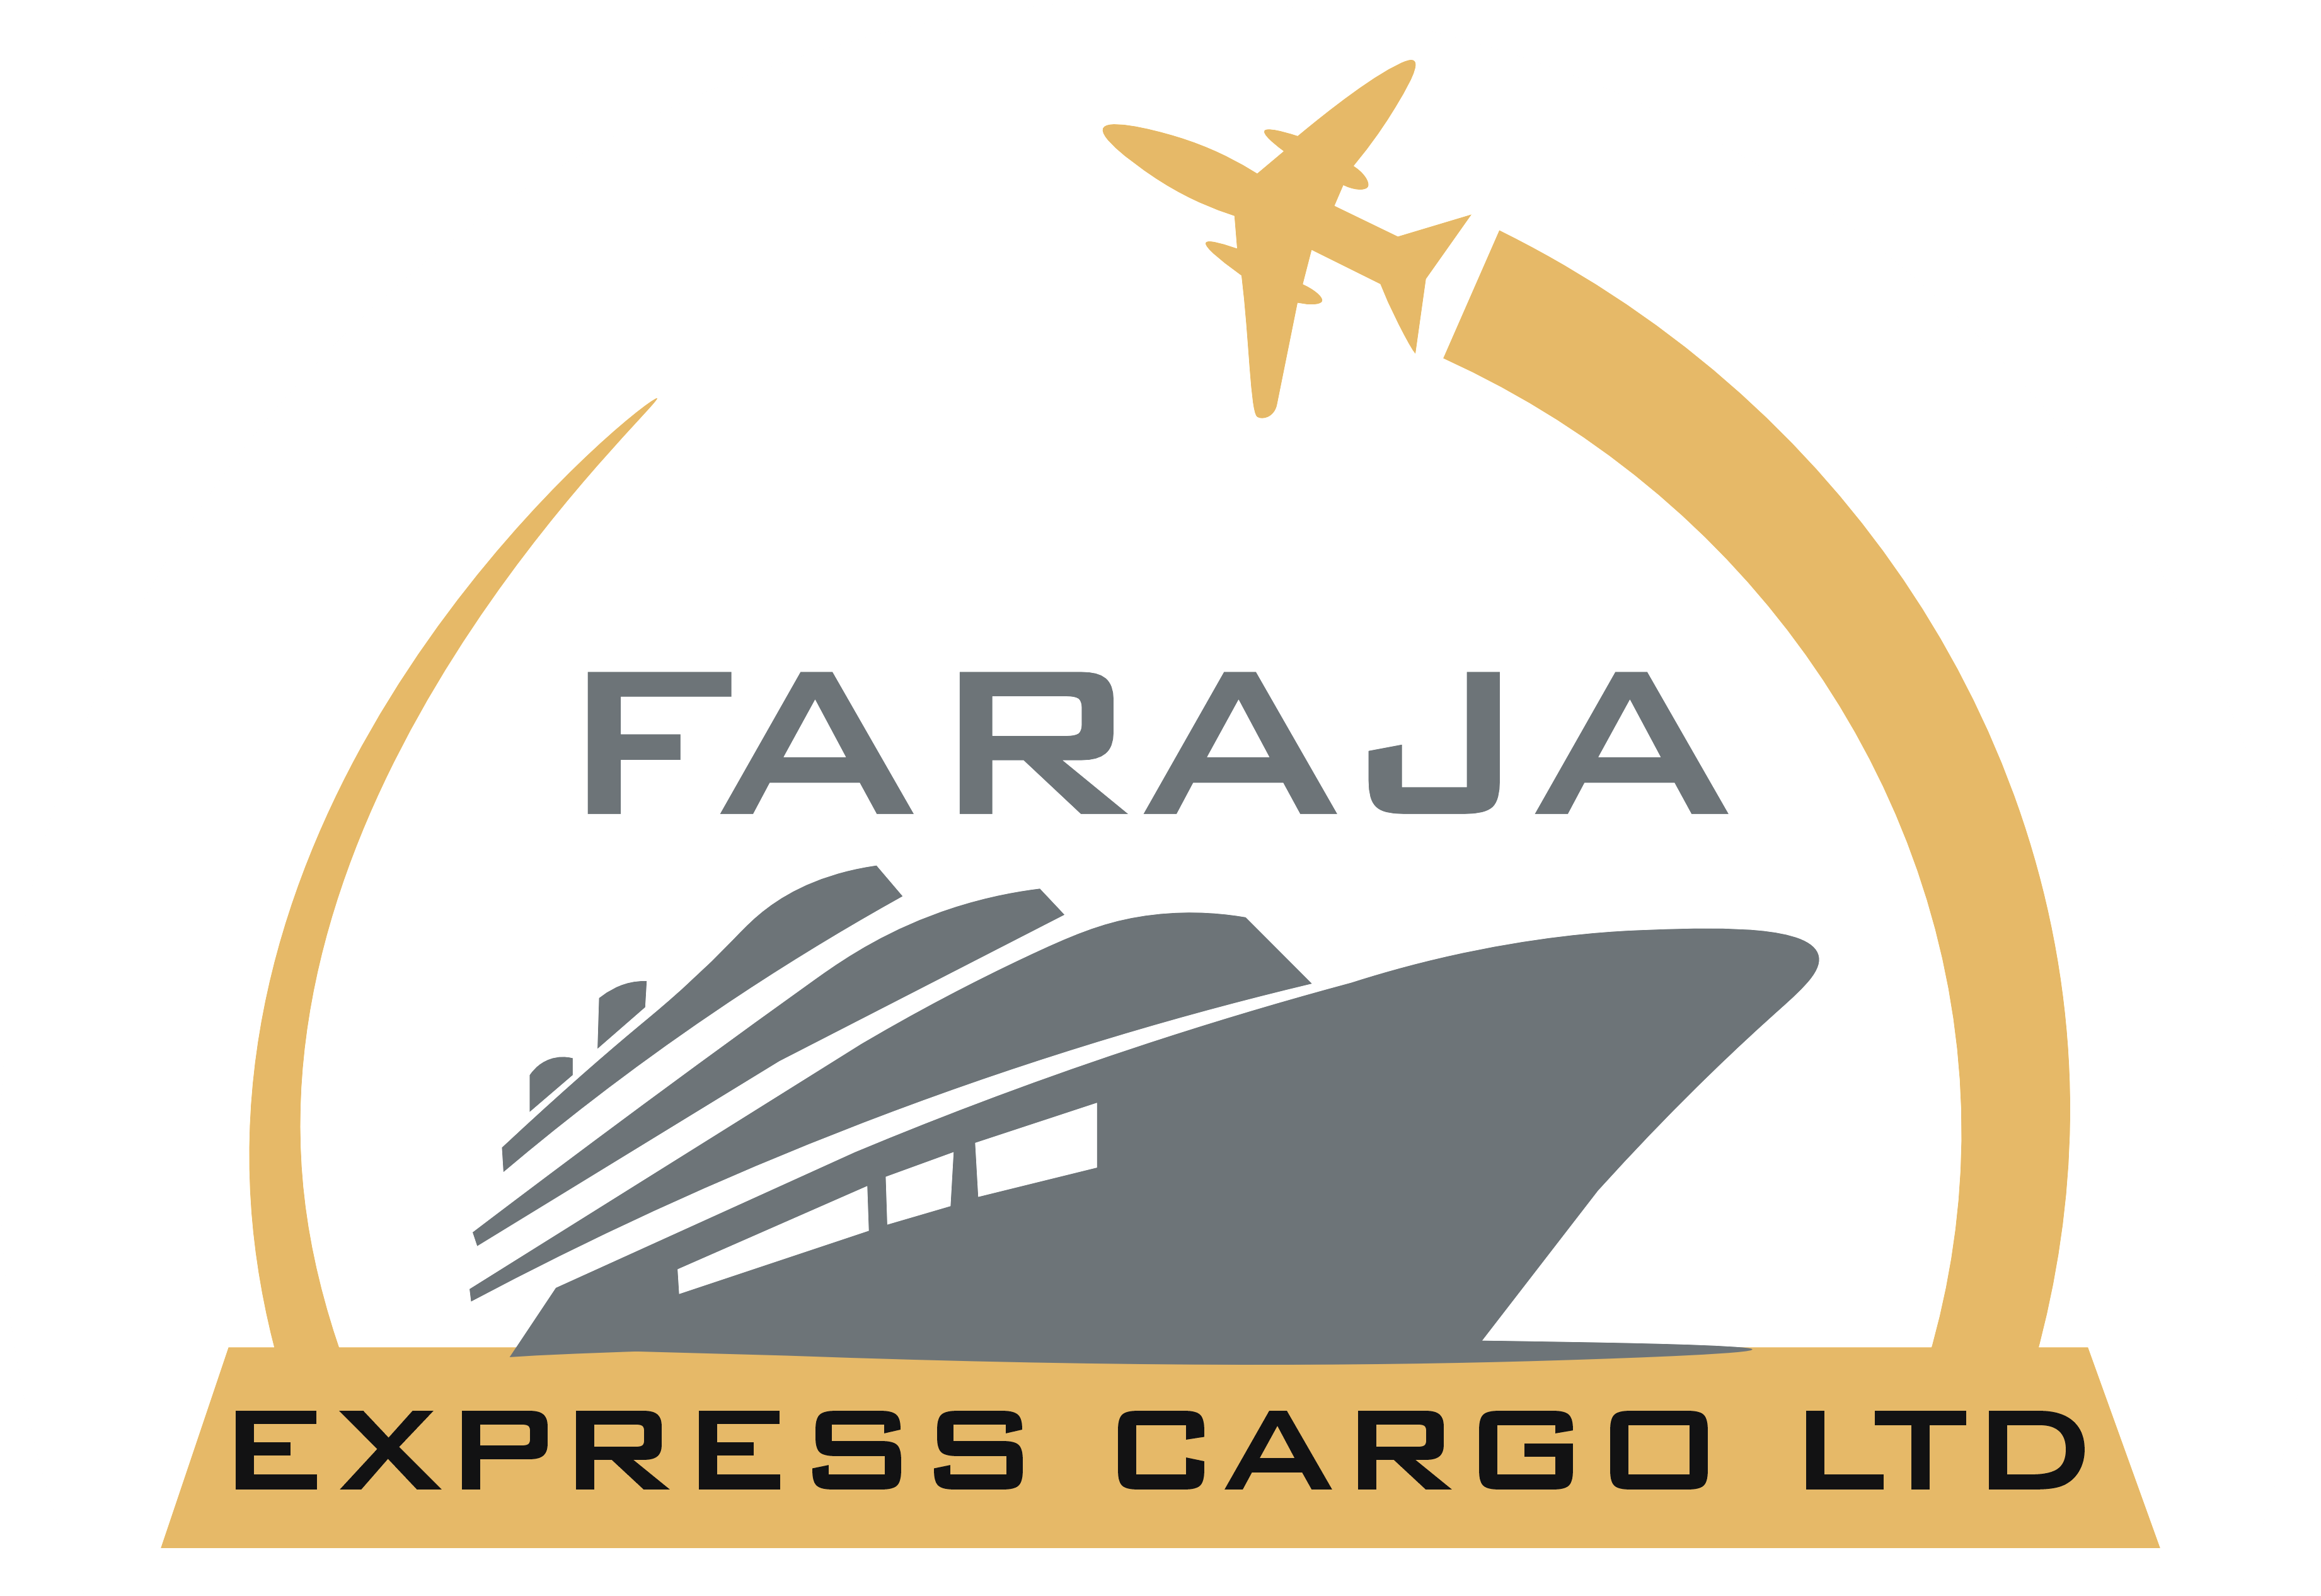 farajaexpress-logo